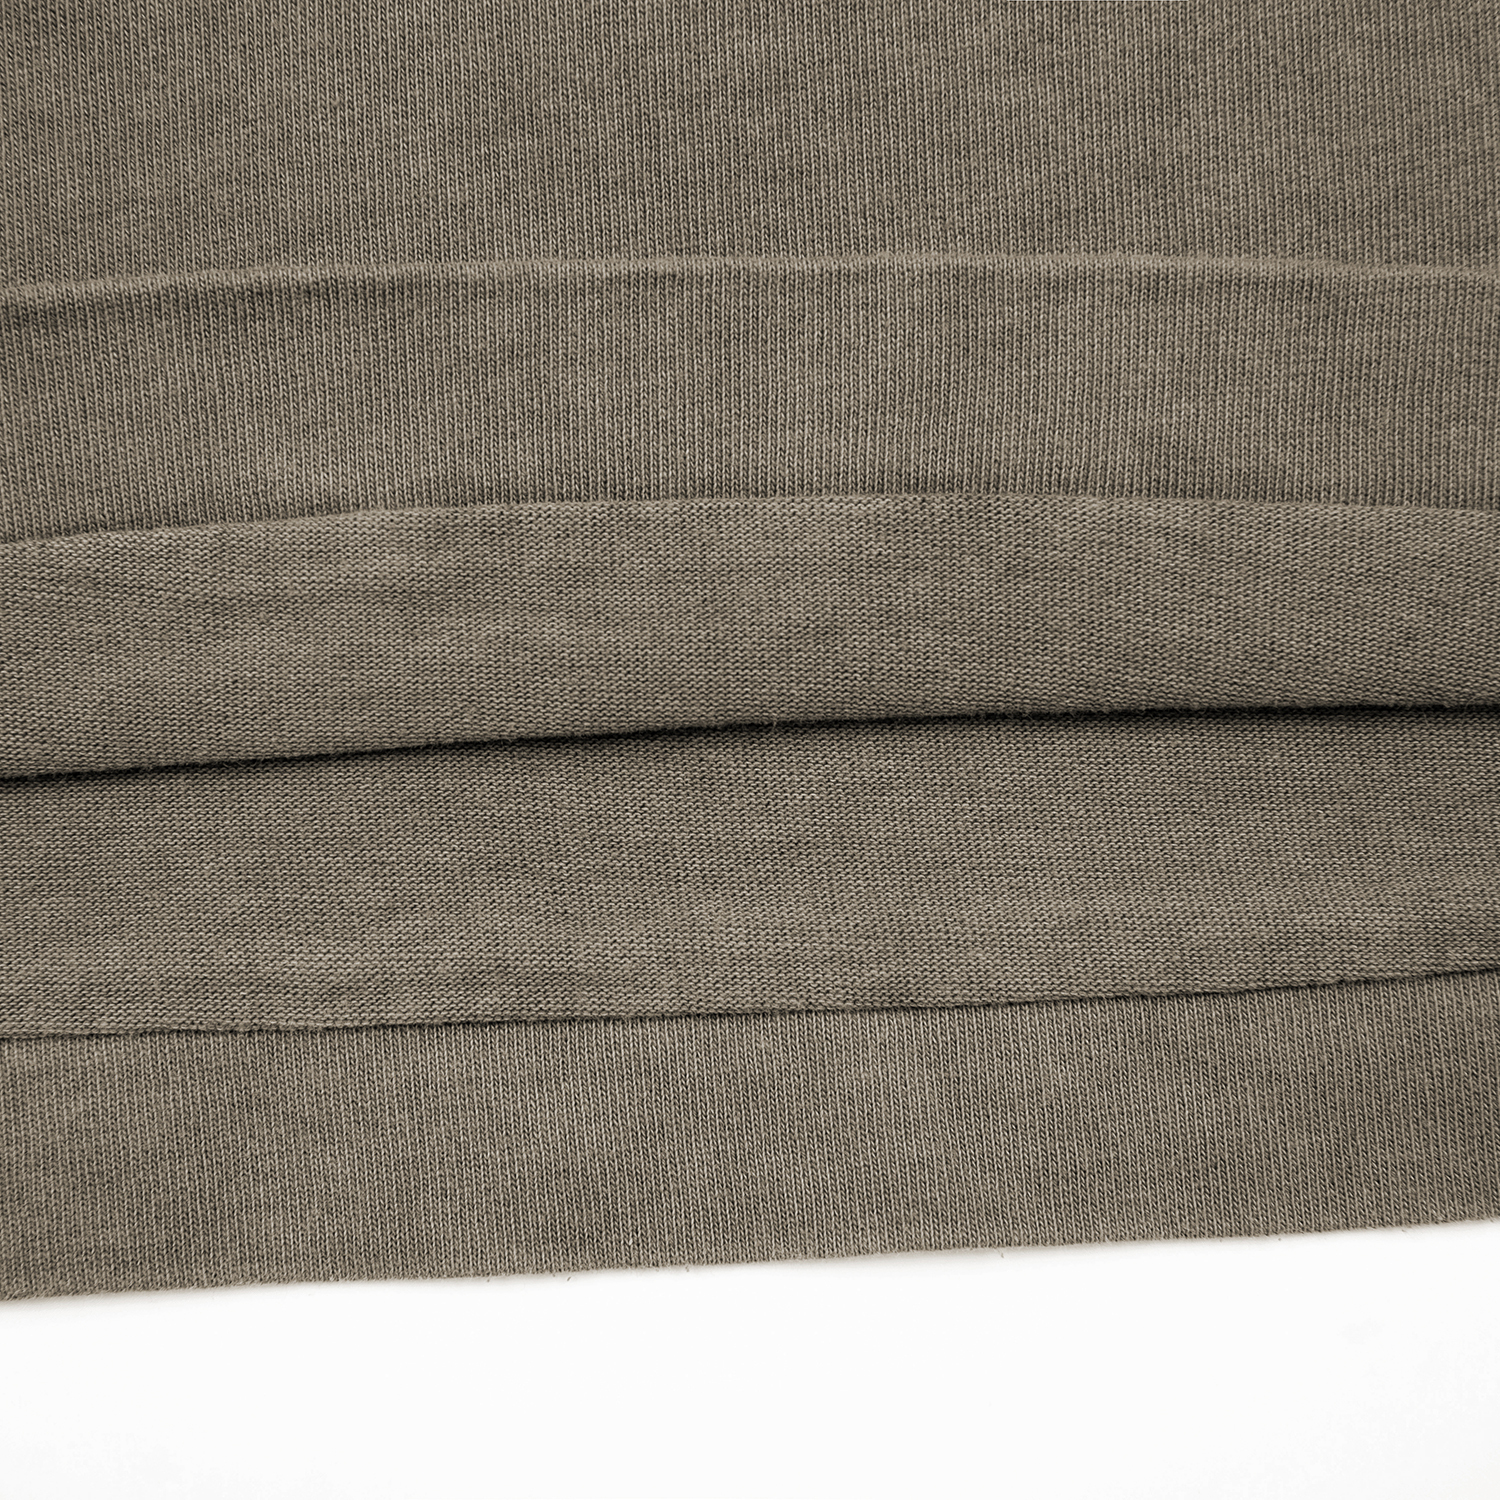 Streetwear Unisex Top Stitching Stone Wash T-Shirt - Print On Demand | HugePOD-13